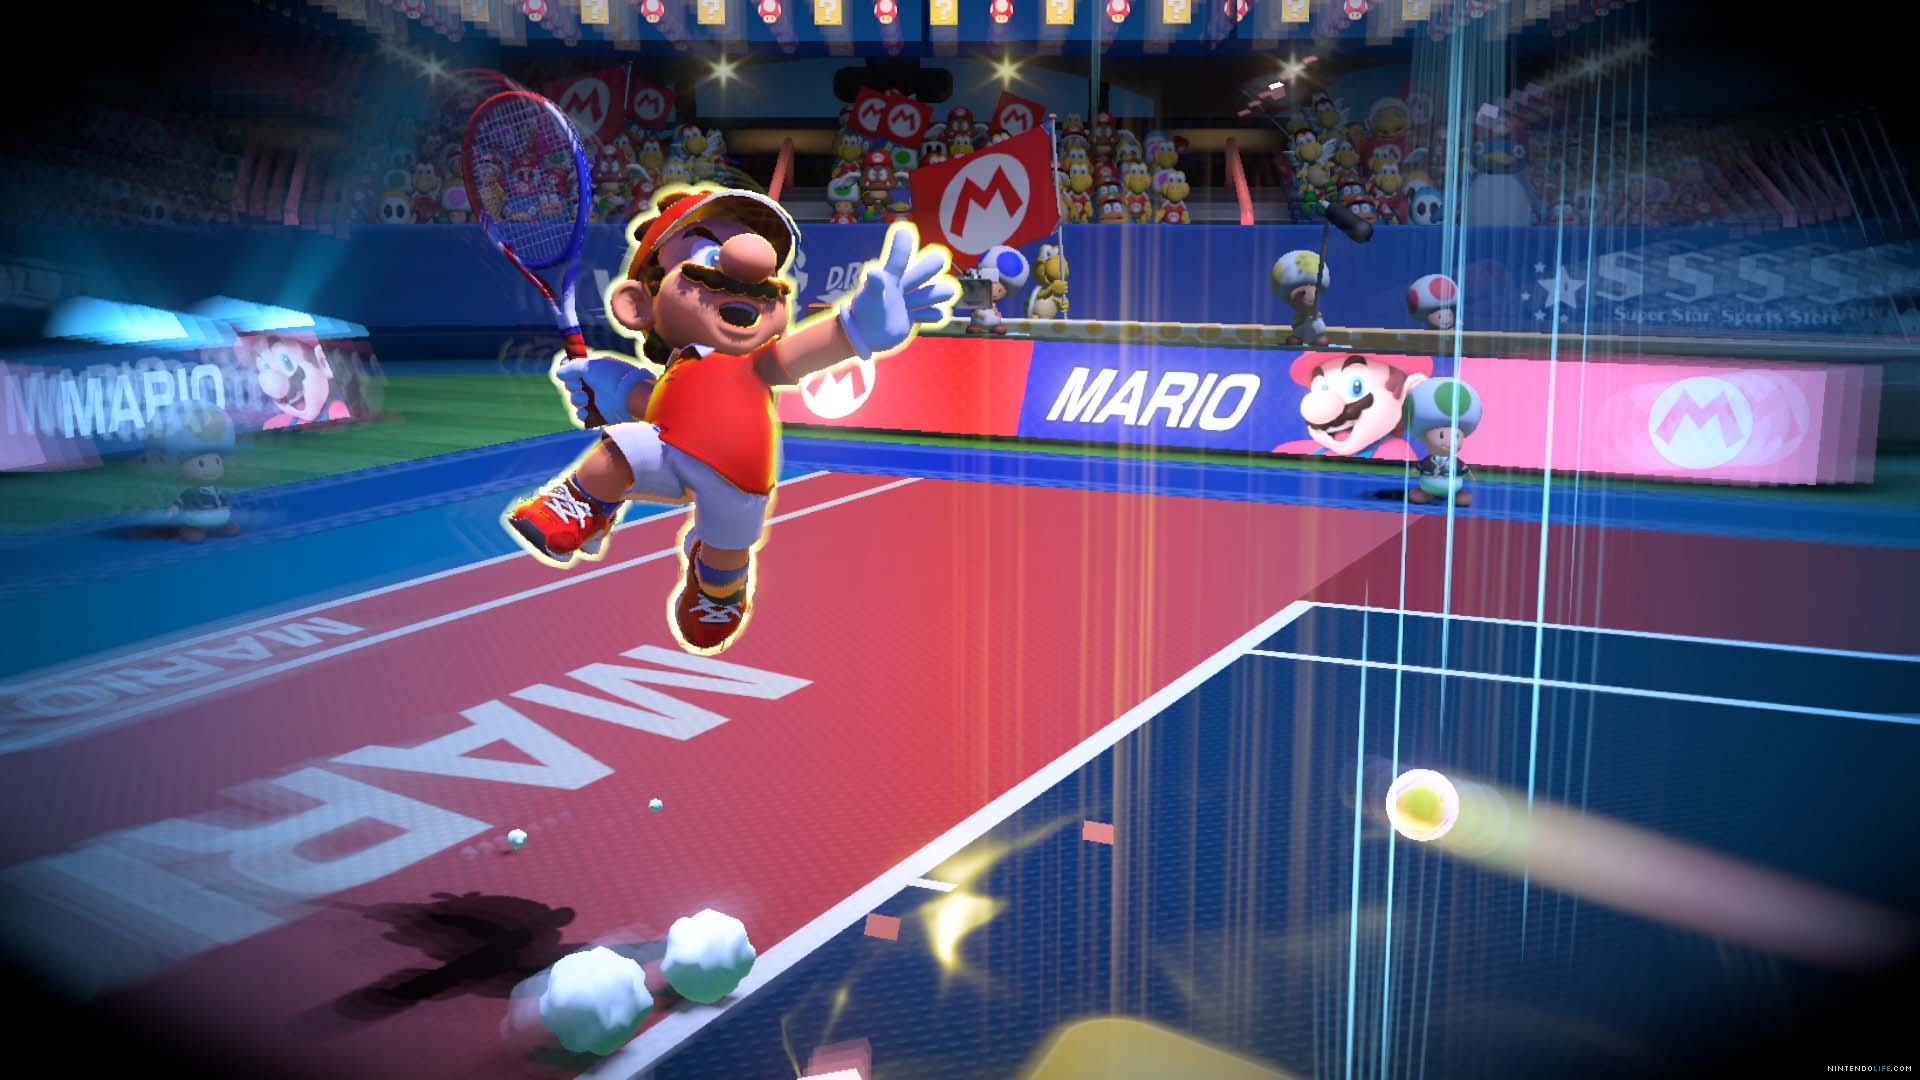 Mario prepairing for a Zone Shot